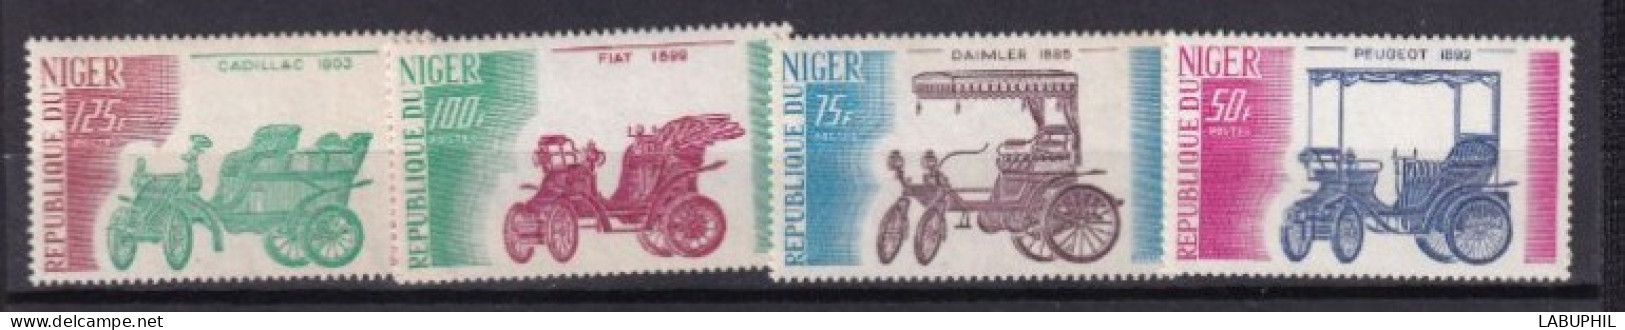 NIGER NEUF MNH ** 1975 Automobiles - Niger (1960-...)